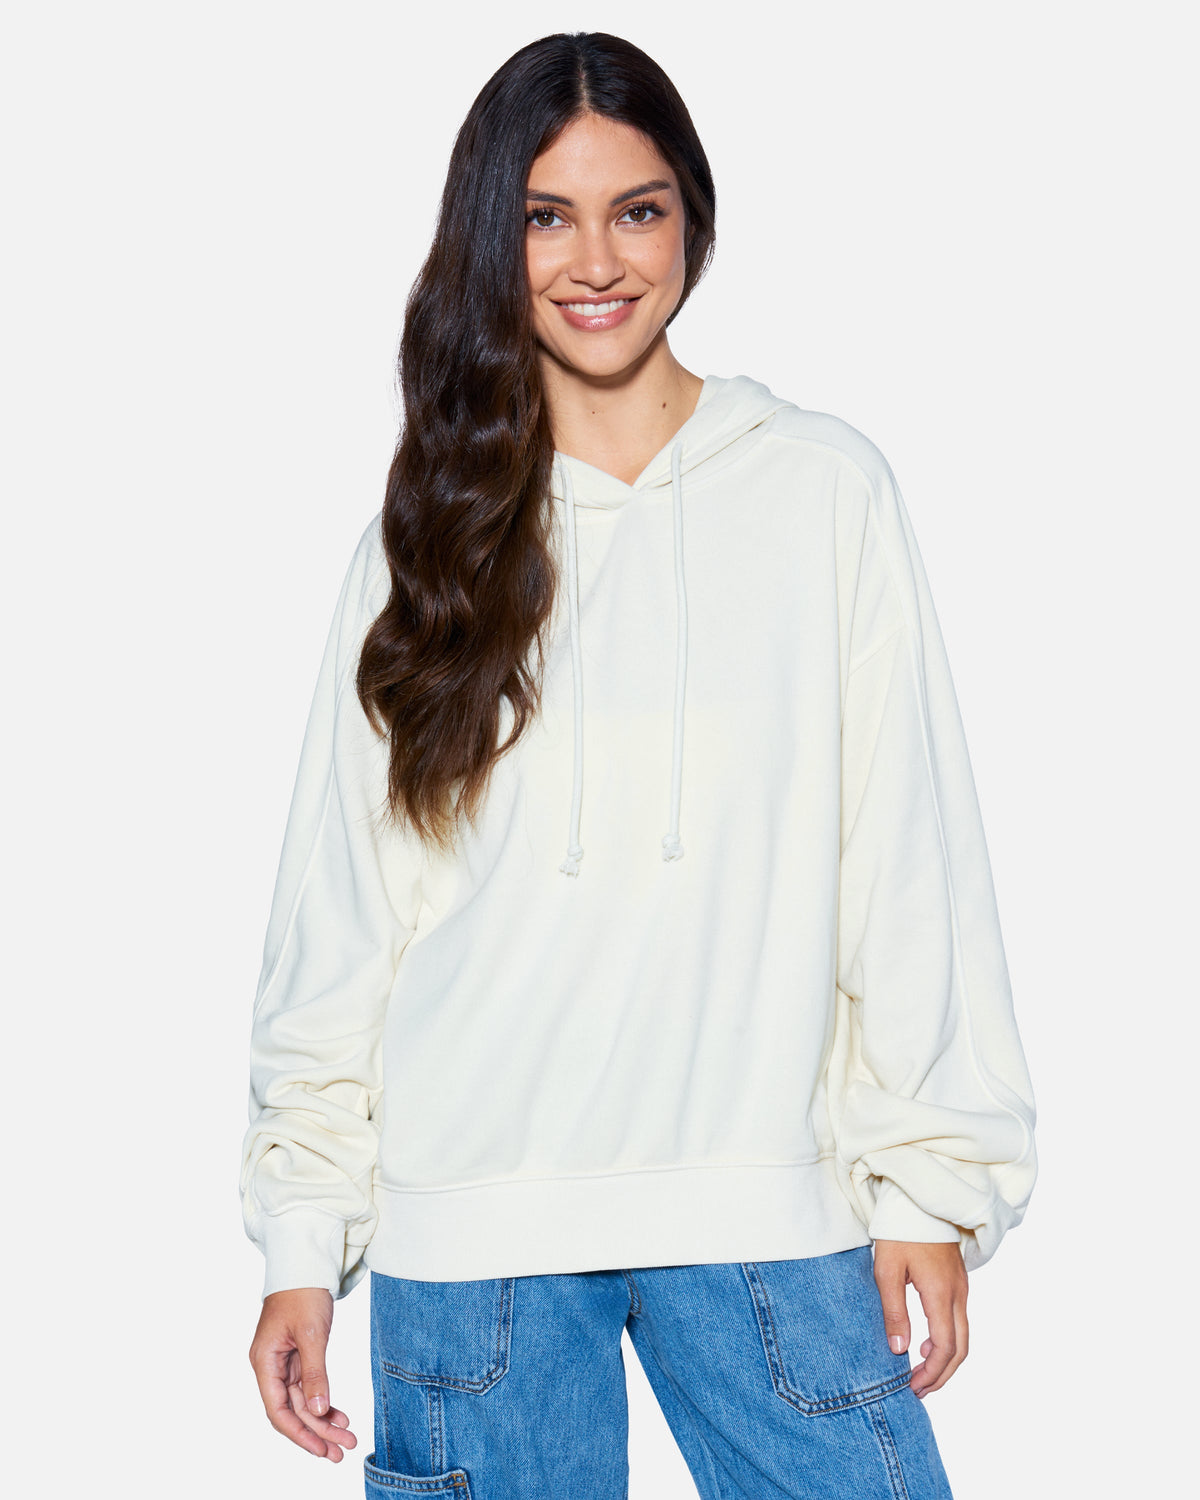 URBEST Women's Hoodies Fleece Lined Collar Pullover Half Zipper Sweatshirts  Long Sleeve Crop Sweater Tops with Thumb Hole BURGUNDY L - ShopStyle